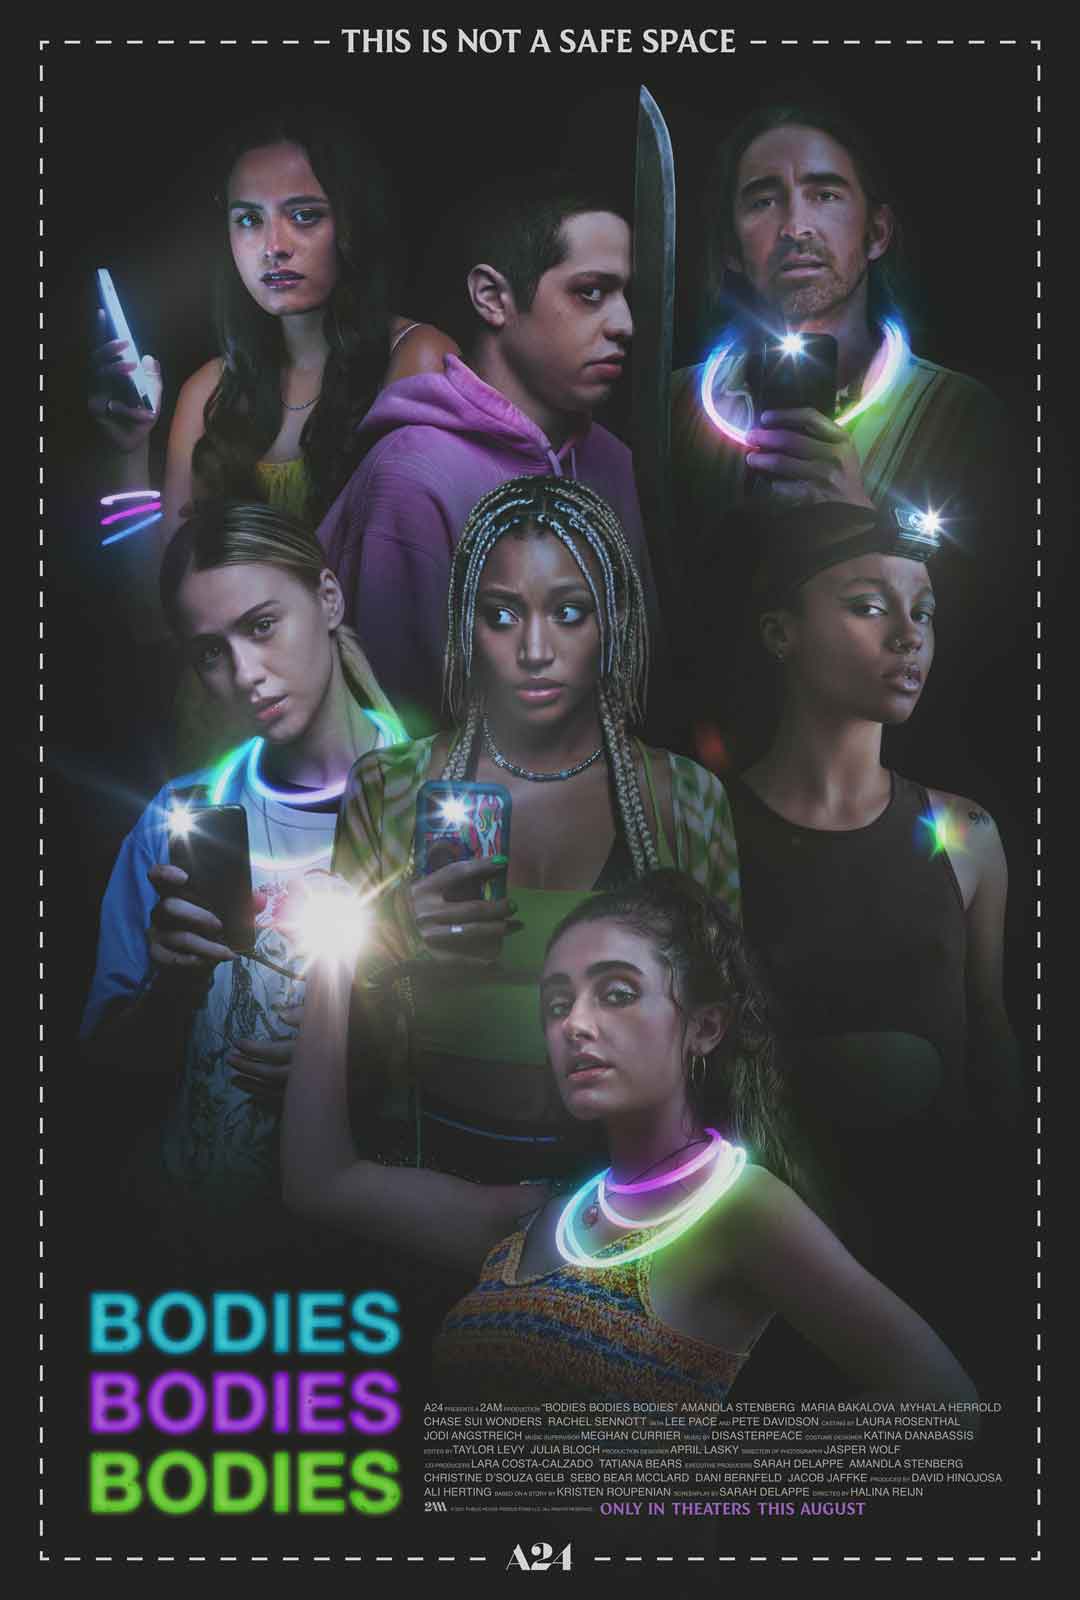 Bodies Bodies Bodies Review